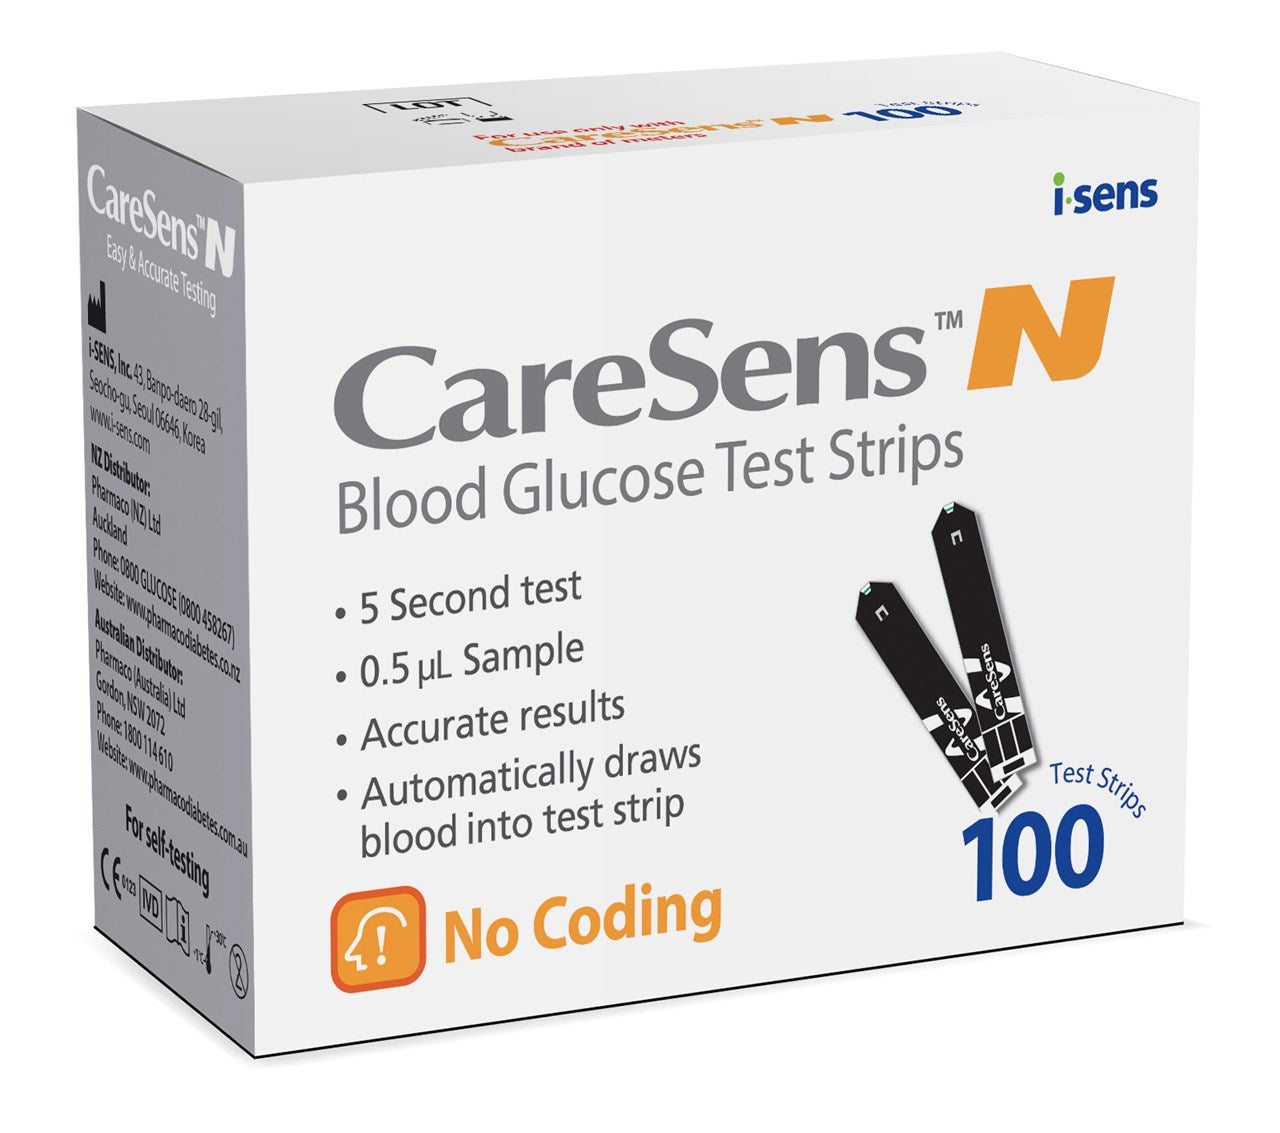 CareSens N Blood Glucose Test Strips 100pk